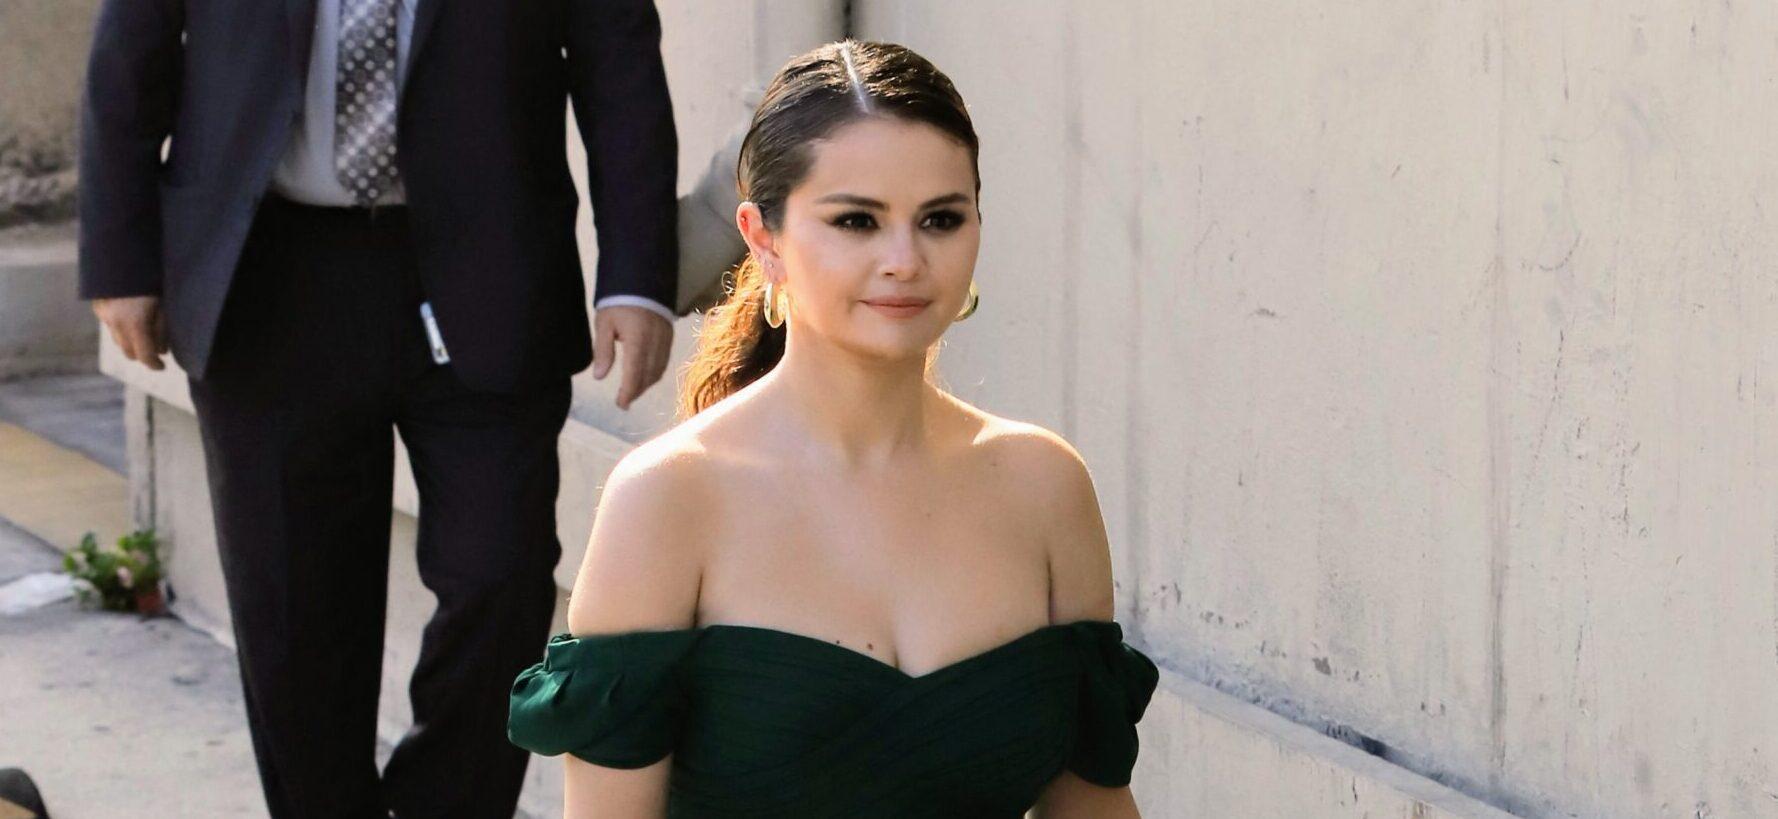 Selena Gomez makes appearance at Jimmy Kimmel